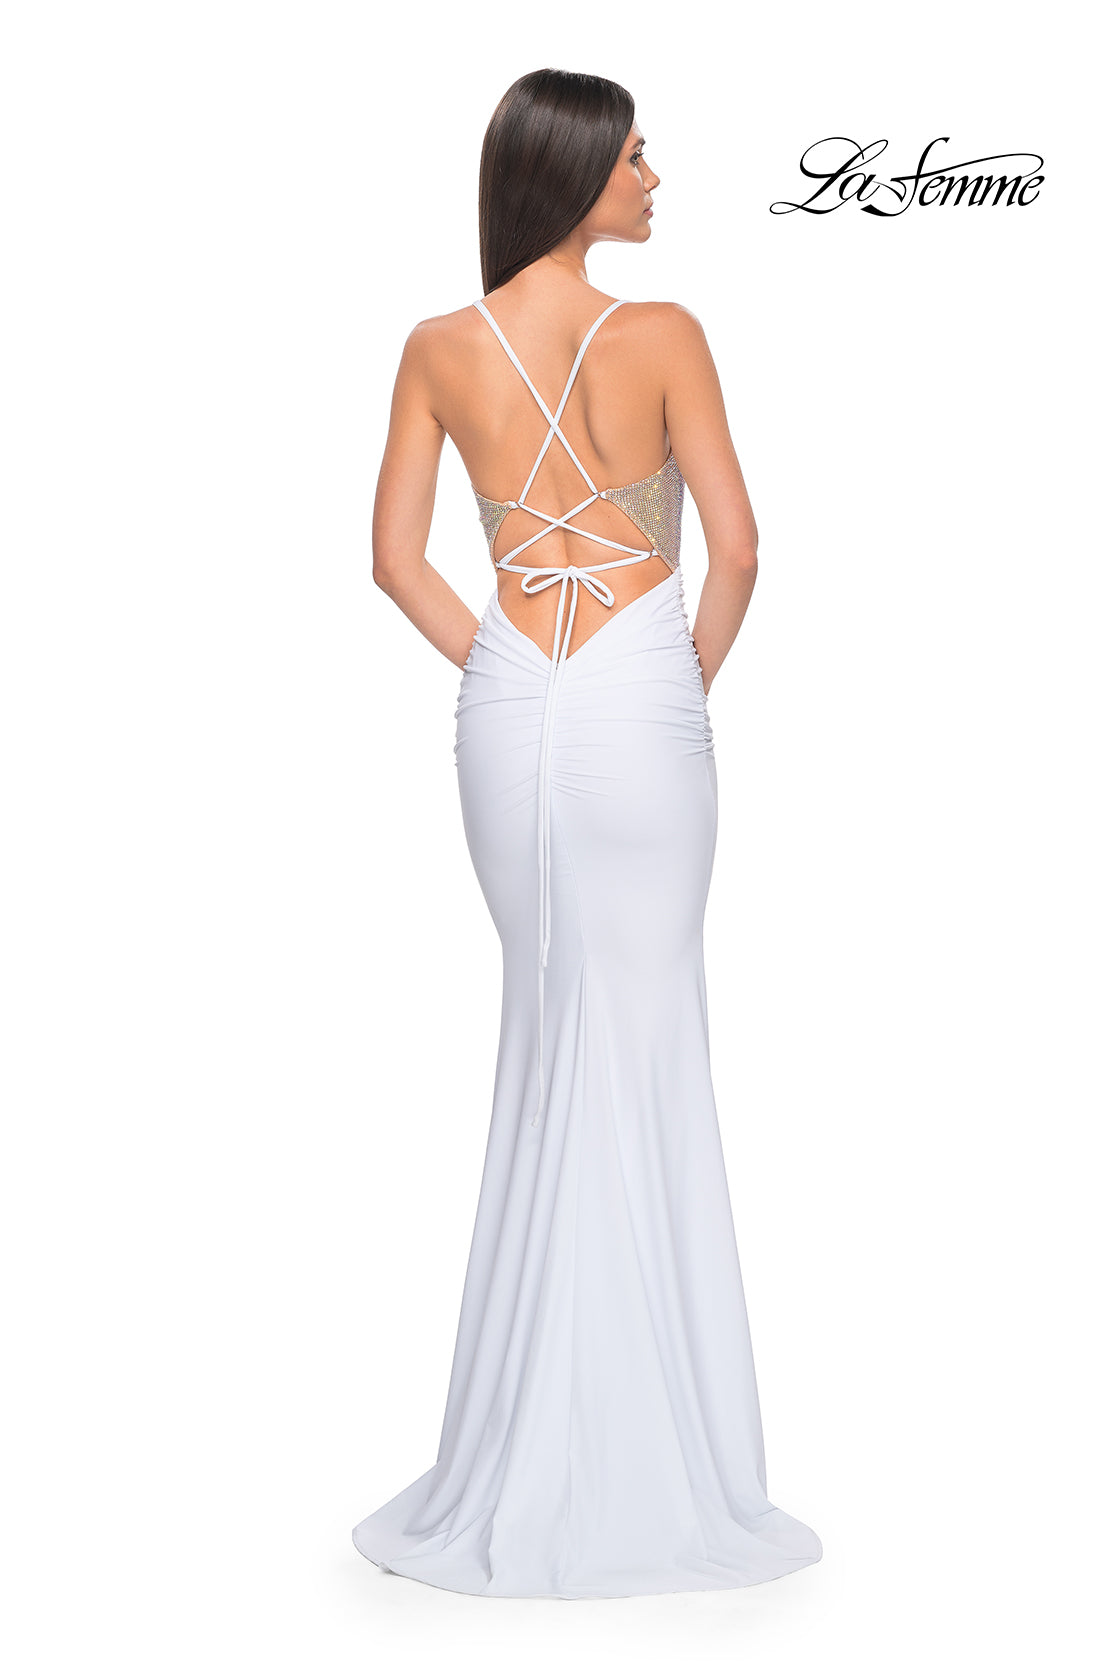 La-Femme-32260-V-Neck-Neckline-Criss-Cross-Back-Hot-Stone-Jersey-Fitted-White-Evening-Dress-B-Chic-Fashions-Prom-Dress